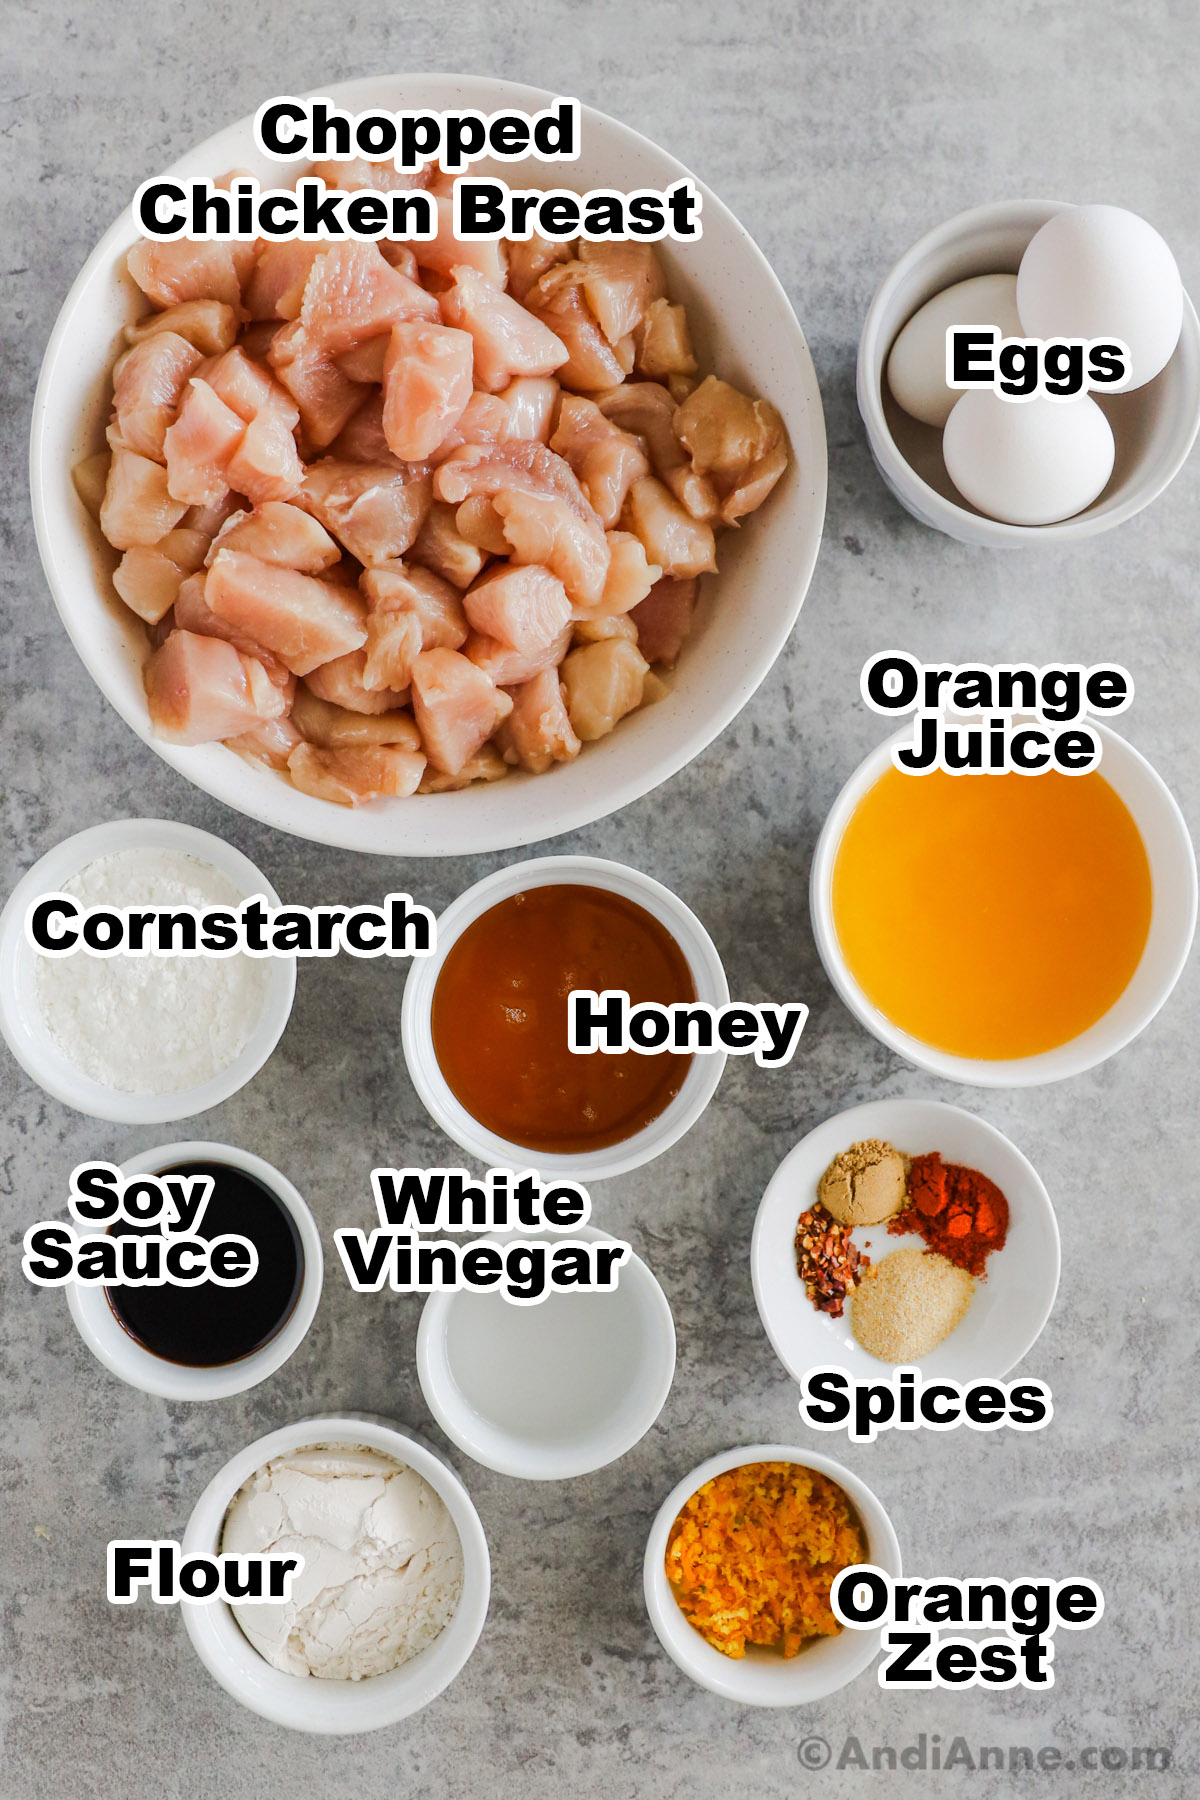 Recipe ingredients on counter in bowls including chopped chicken, eggs, cornstarch, orange juice, honey, soy sauce, white vinegar, flour and orange zest.